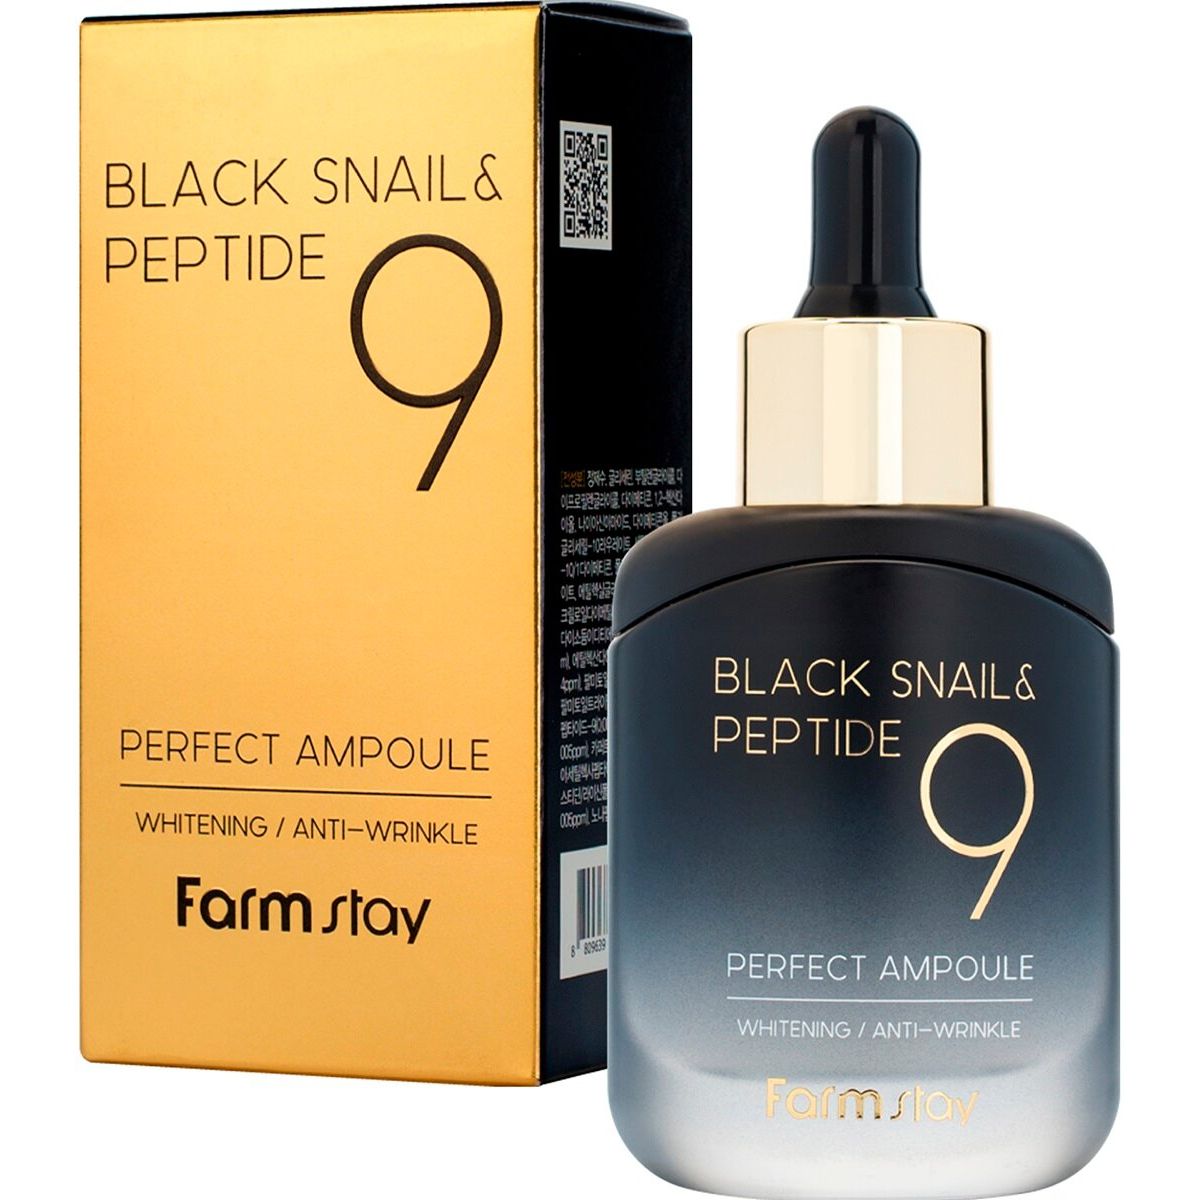 Сыворотка для лица FarmStay Black Snail & Peptide 9 Perfect Ampoule 35 мл - фото 1